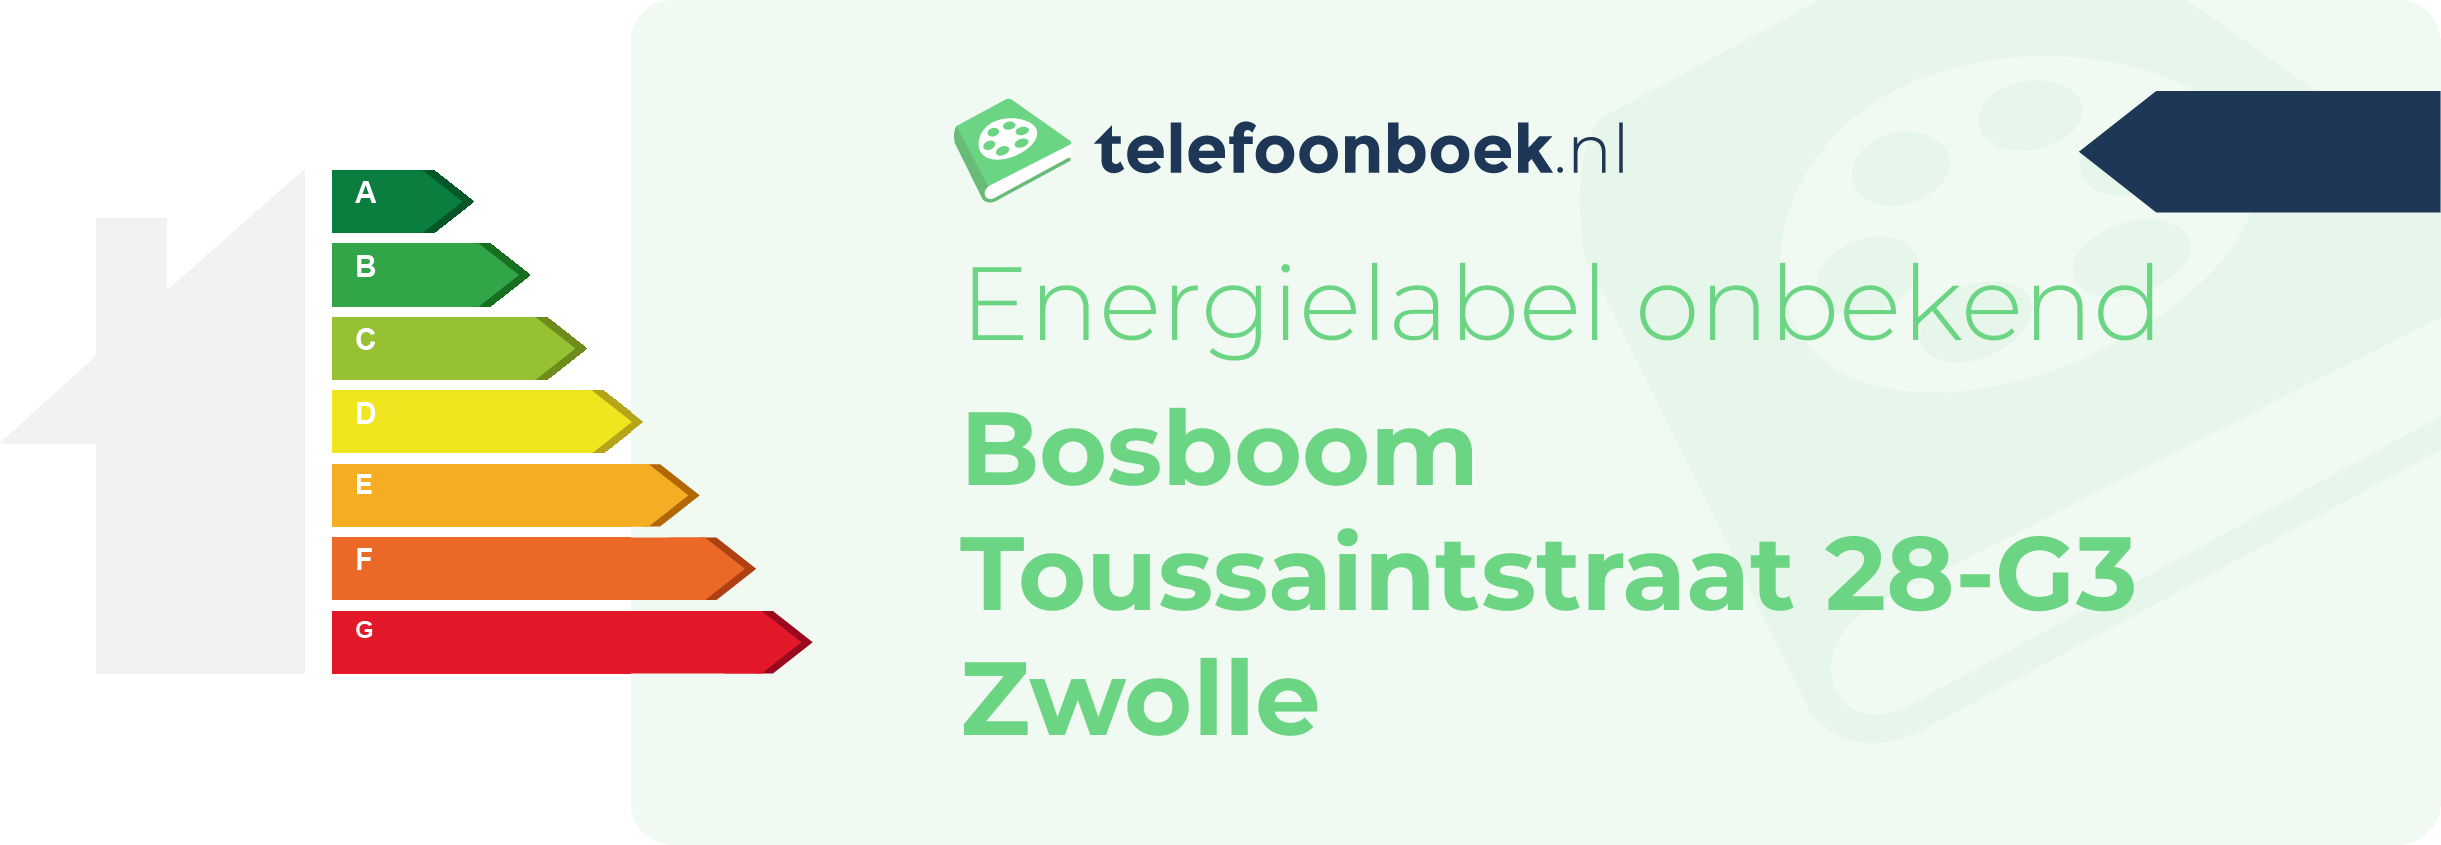 Energielabel Bosboom Toussaintstraat 28-G3 Zwolle